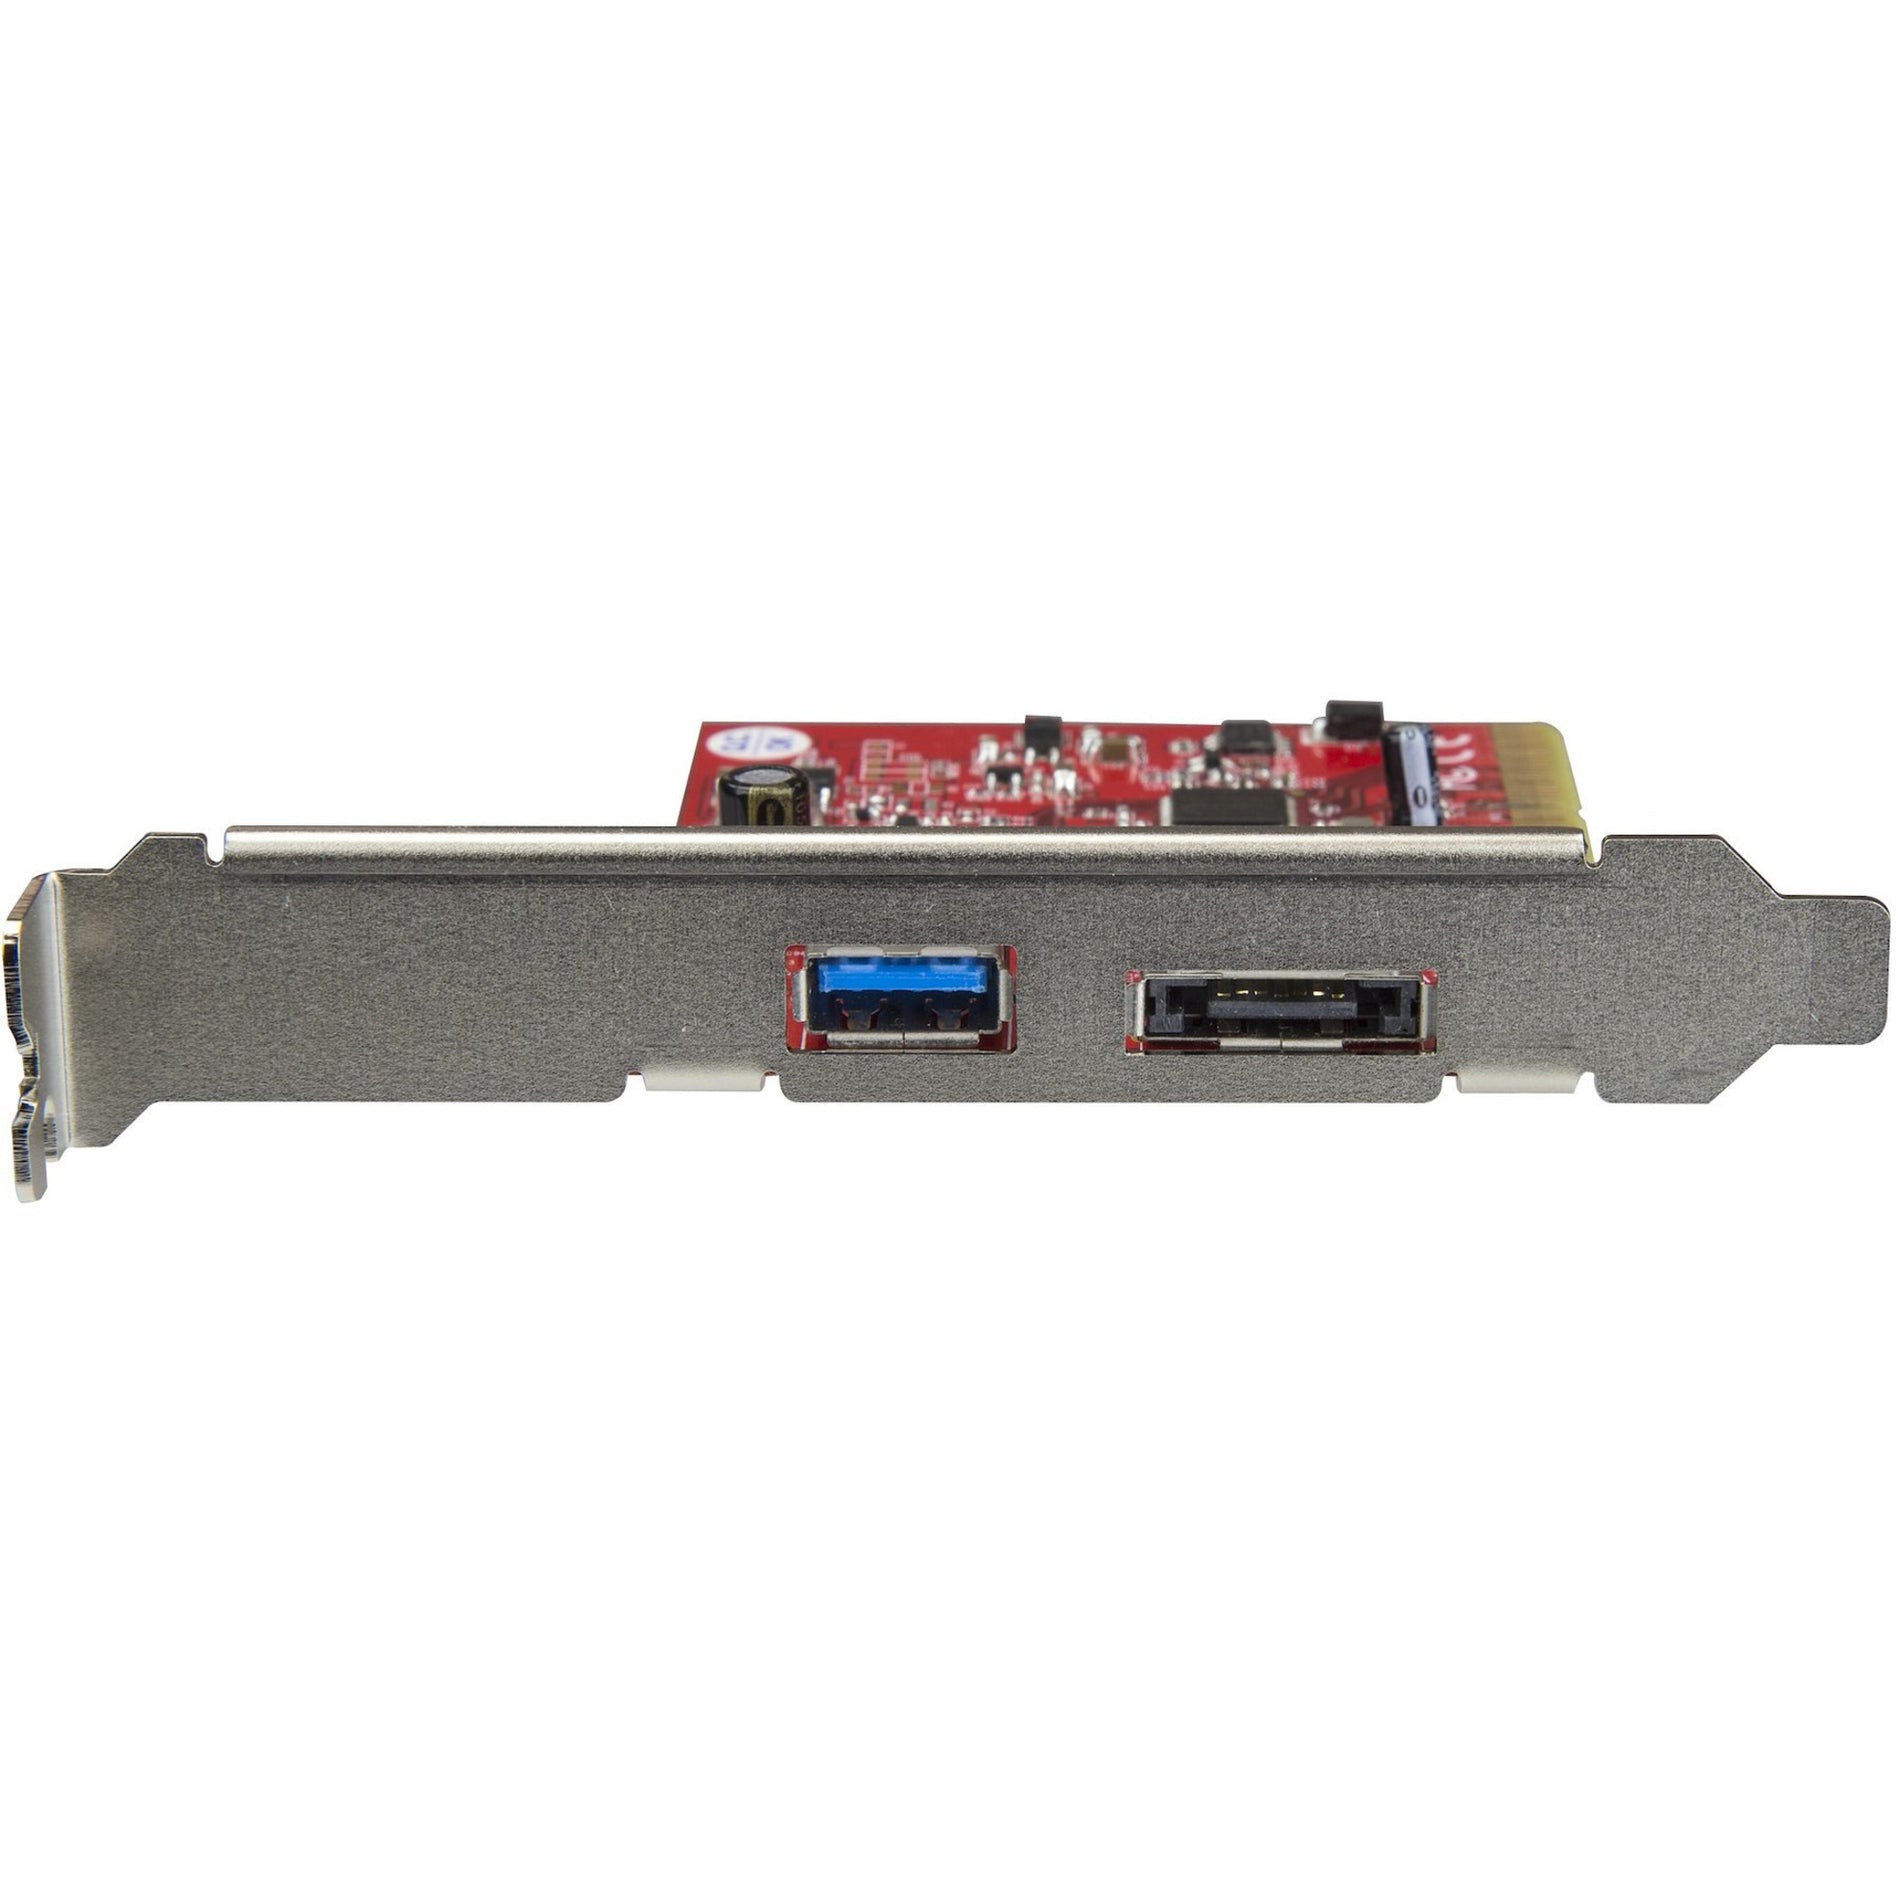 StarTech.com PEXUSB311A1E 2-Port USB 3.1 (10Gbps) and eSATA PCIe Card - 1x USB-A and 1x eSATA, Plug-in Card, Red [Discontinued]